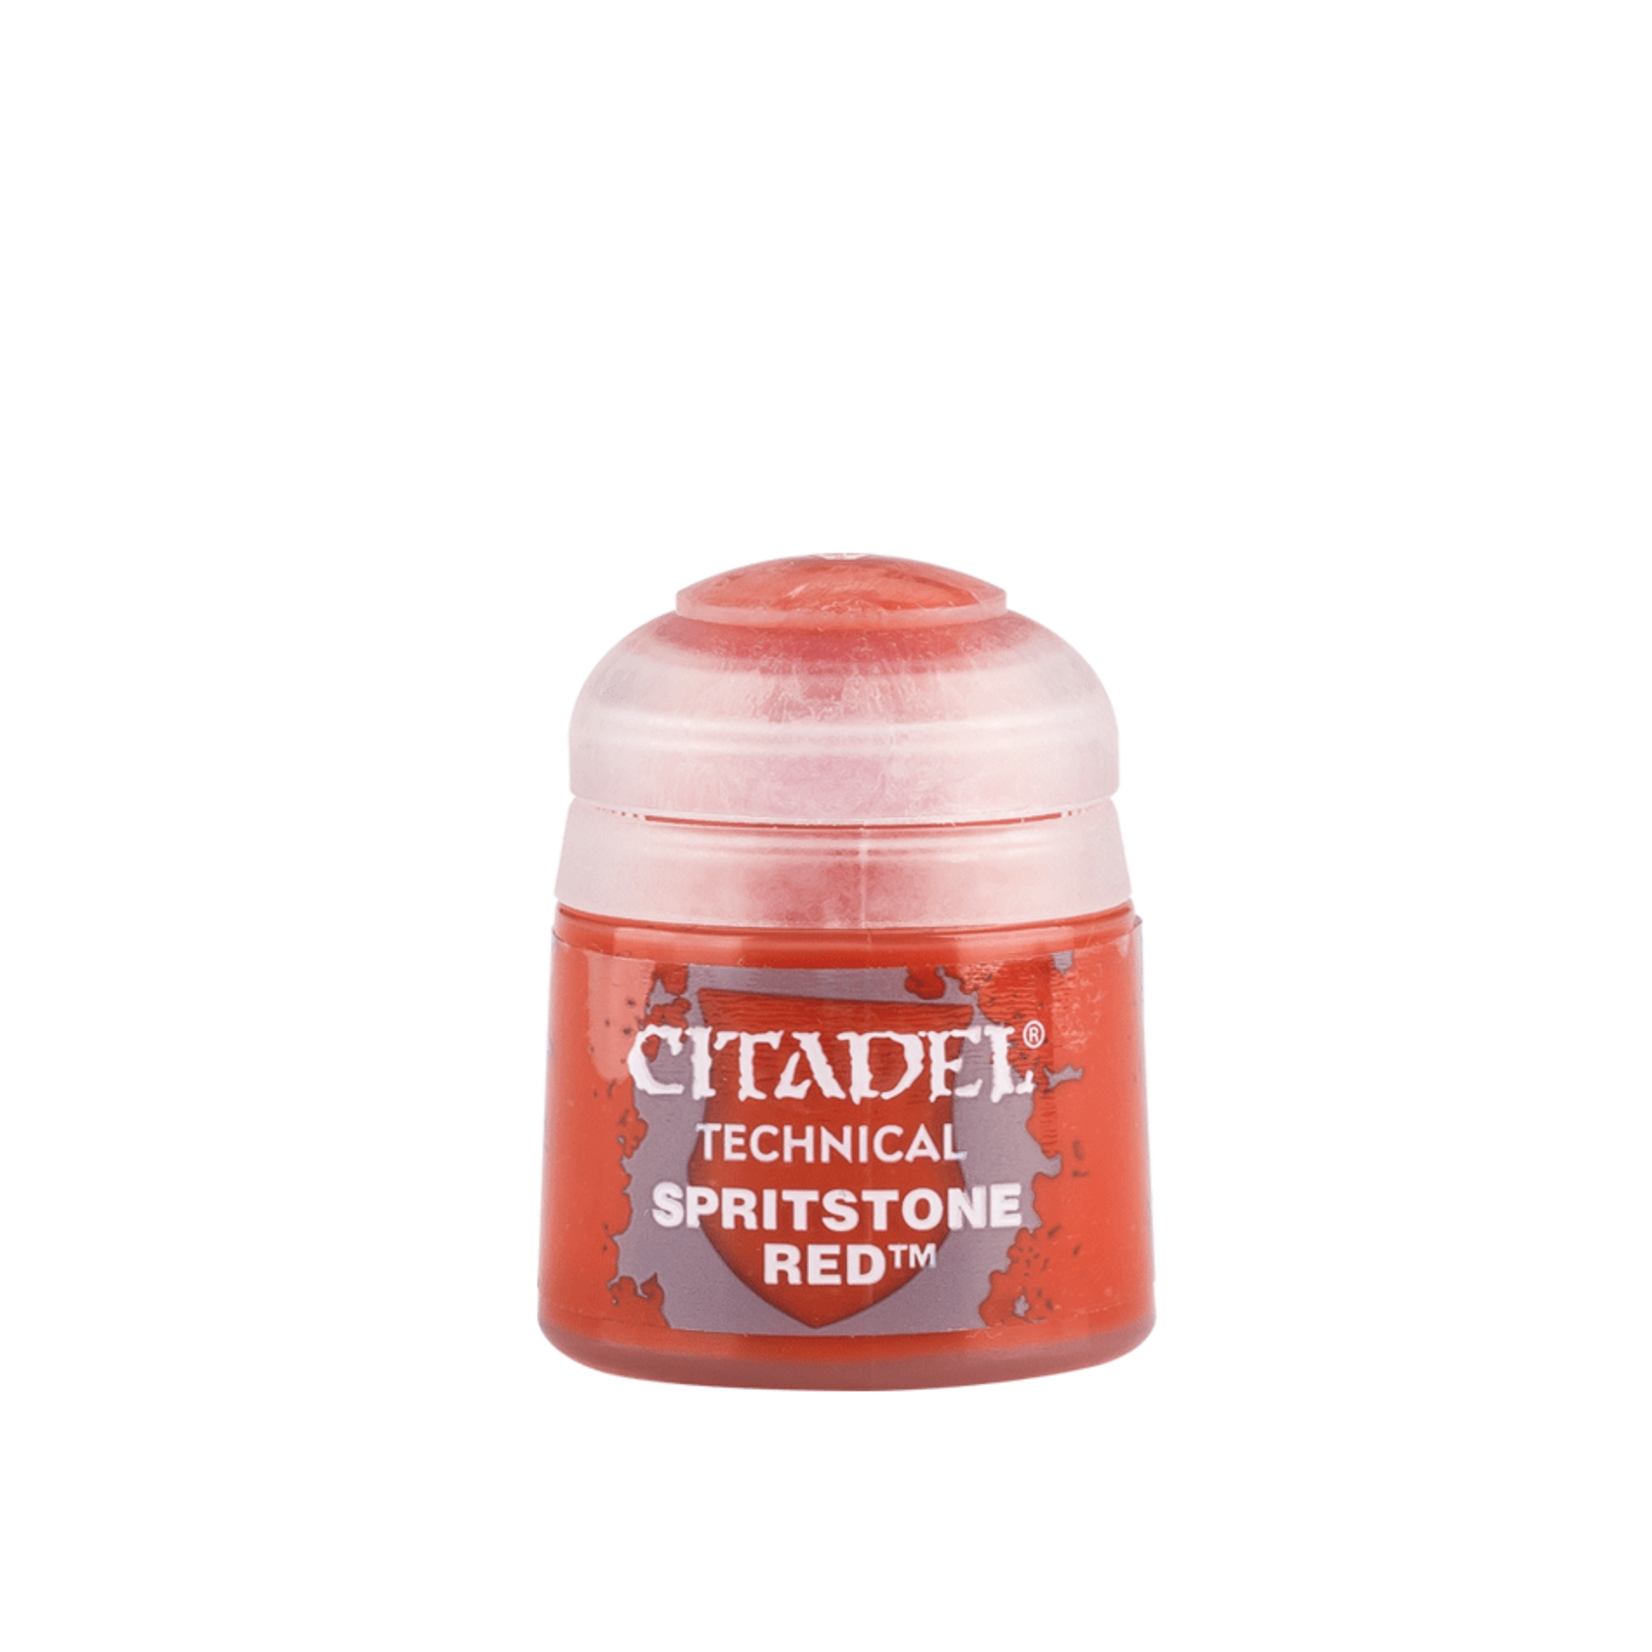 Citadel Spiritstone Red (Technical 12ml)